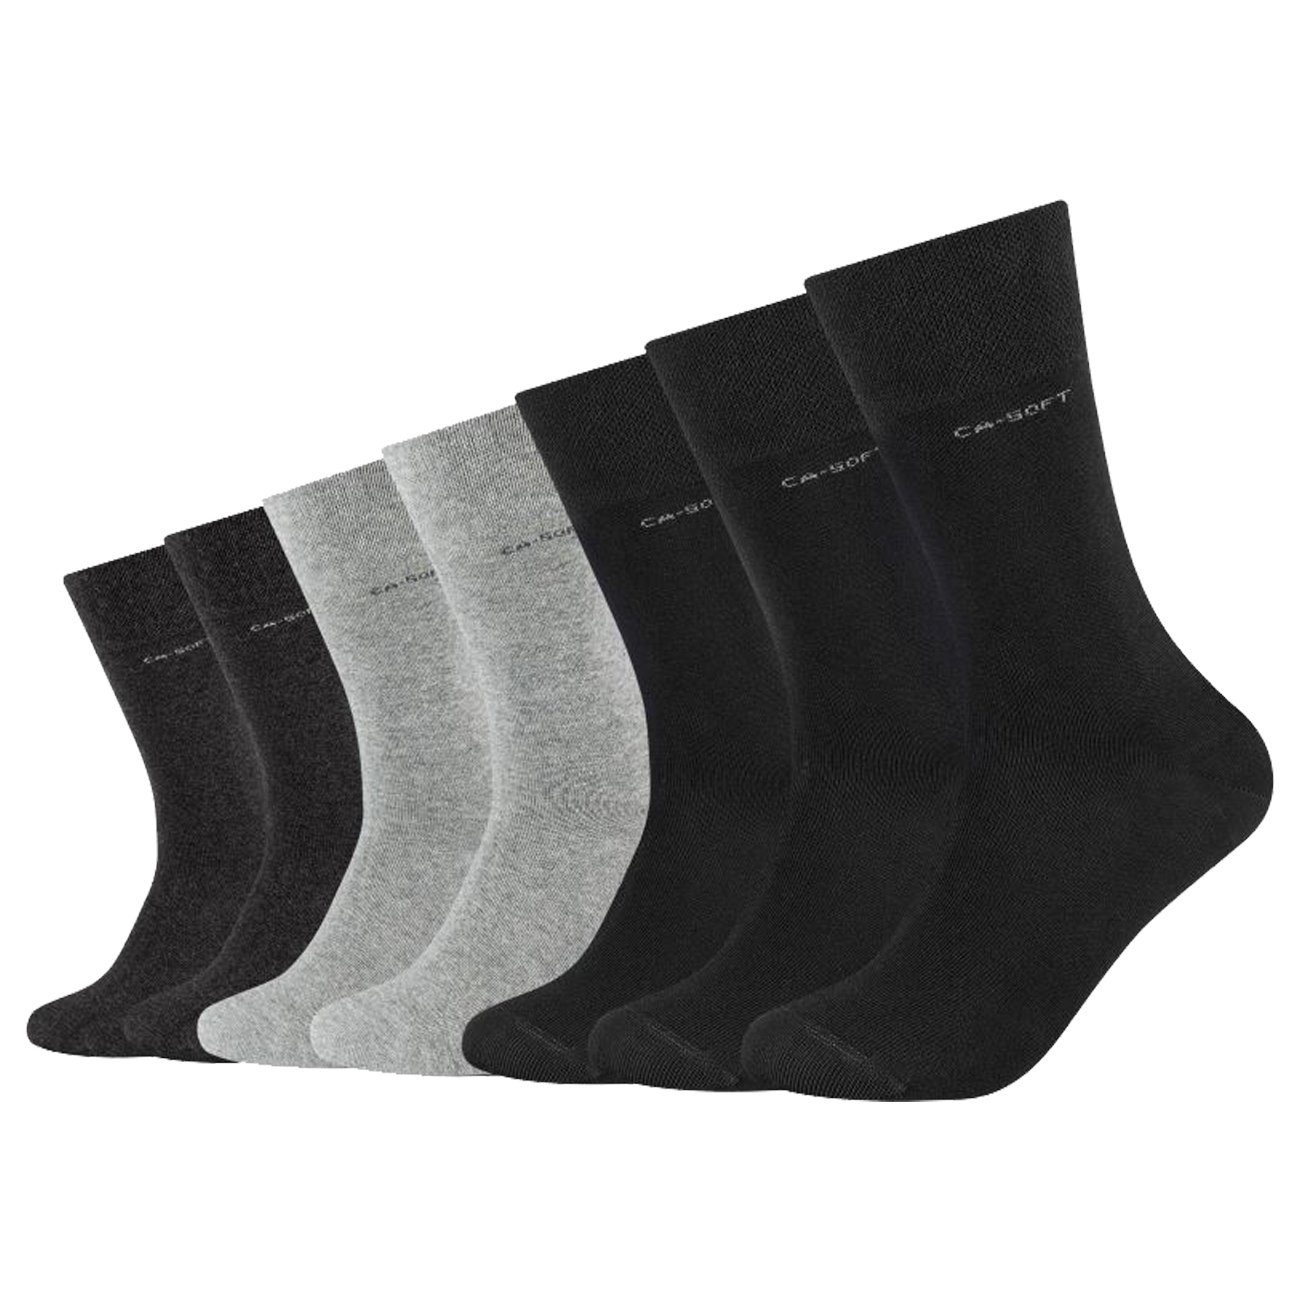 Regular CA-Soft Gesundheitssocken (7-Paar) Socken Mix ohne Camano Langsocken Gummi Unisex (9997) Black